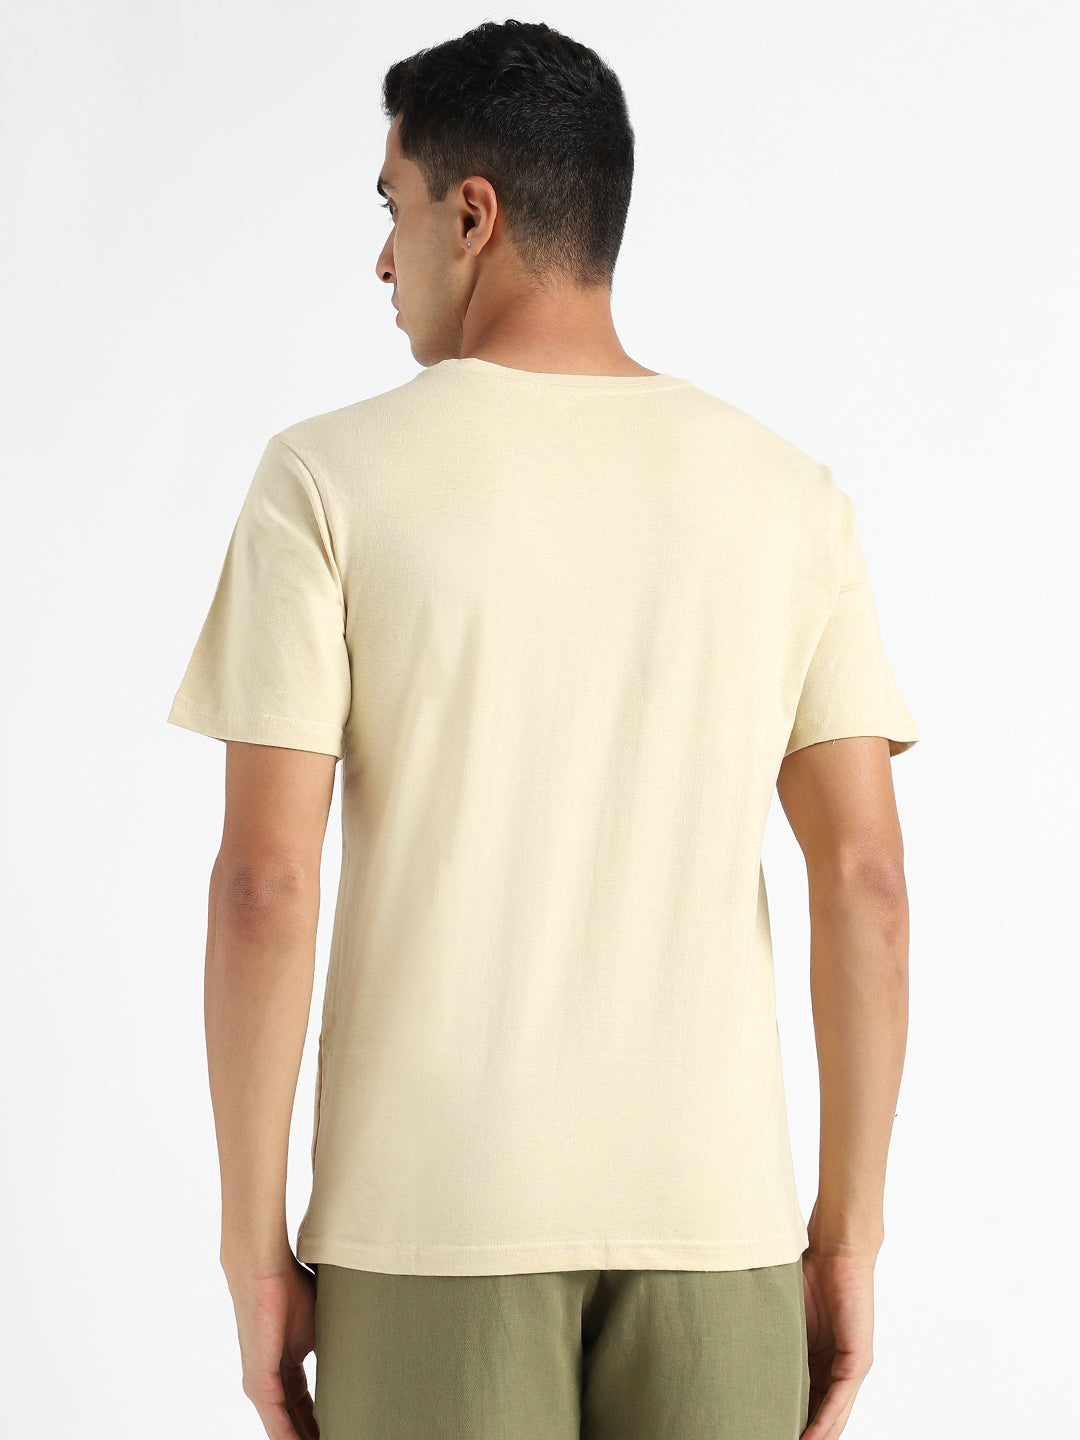 Lemon Yellow Organic Cotton & Naturally Fiber Dyed T-shirt